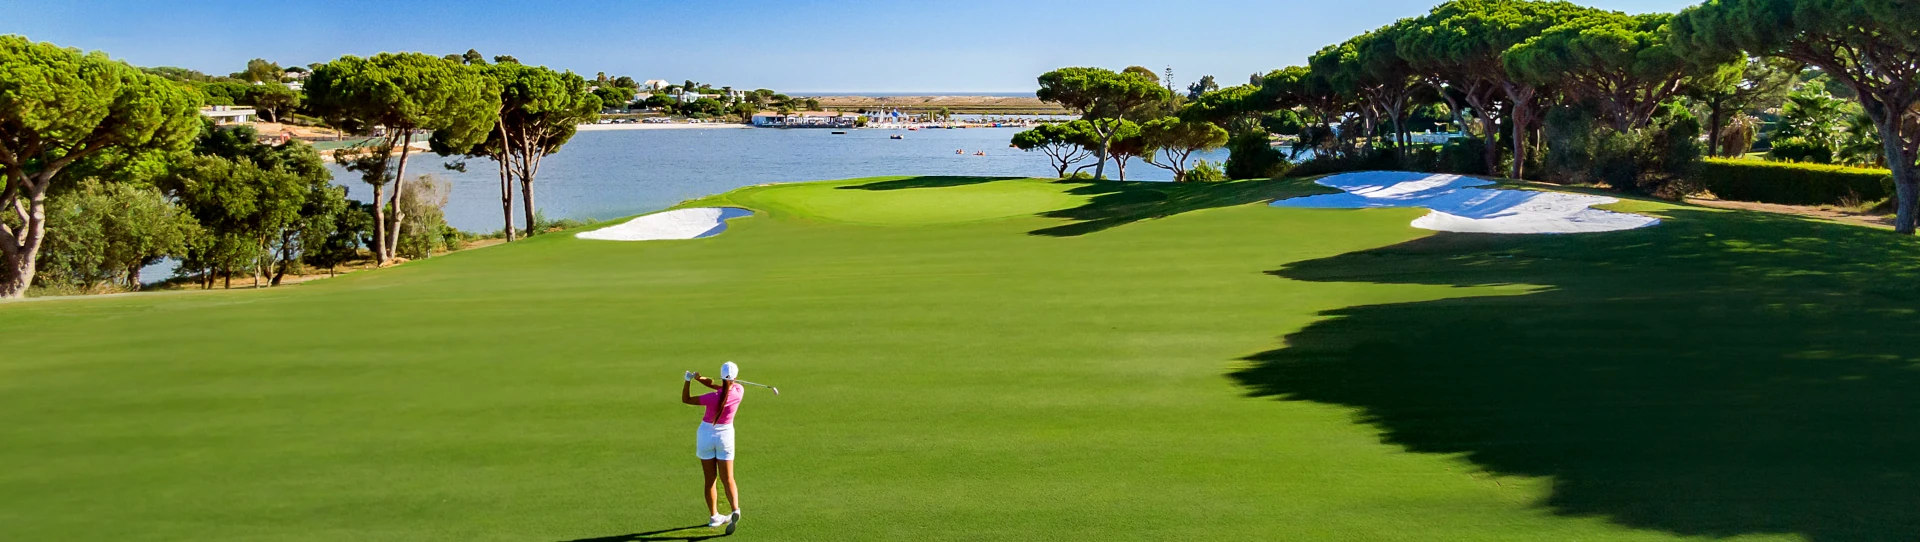 Portugal golf holidays - Quinta do Lago South & Laranjal - Photo 1